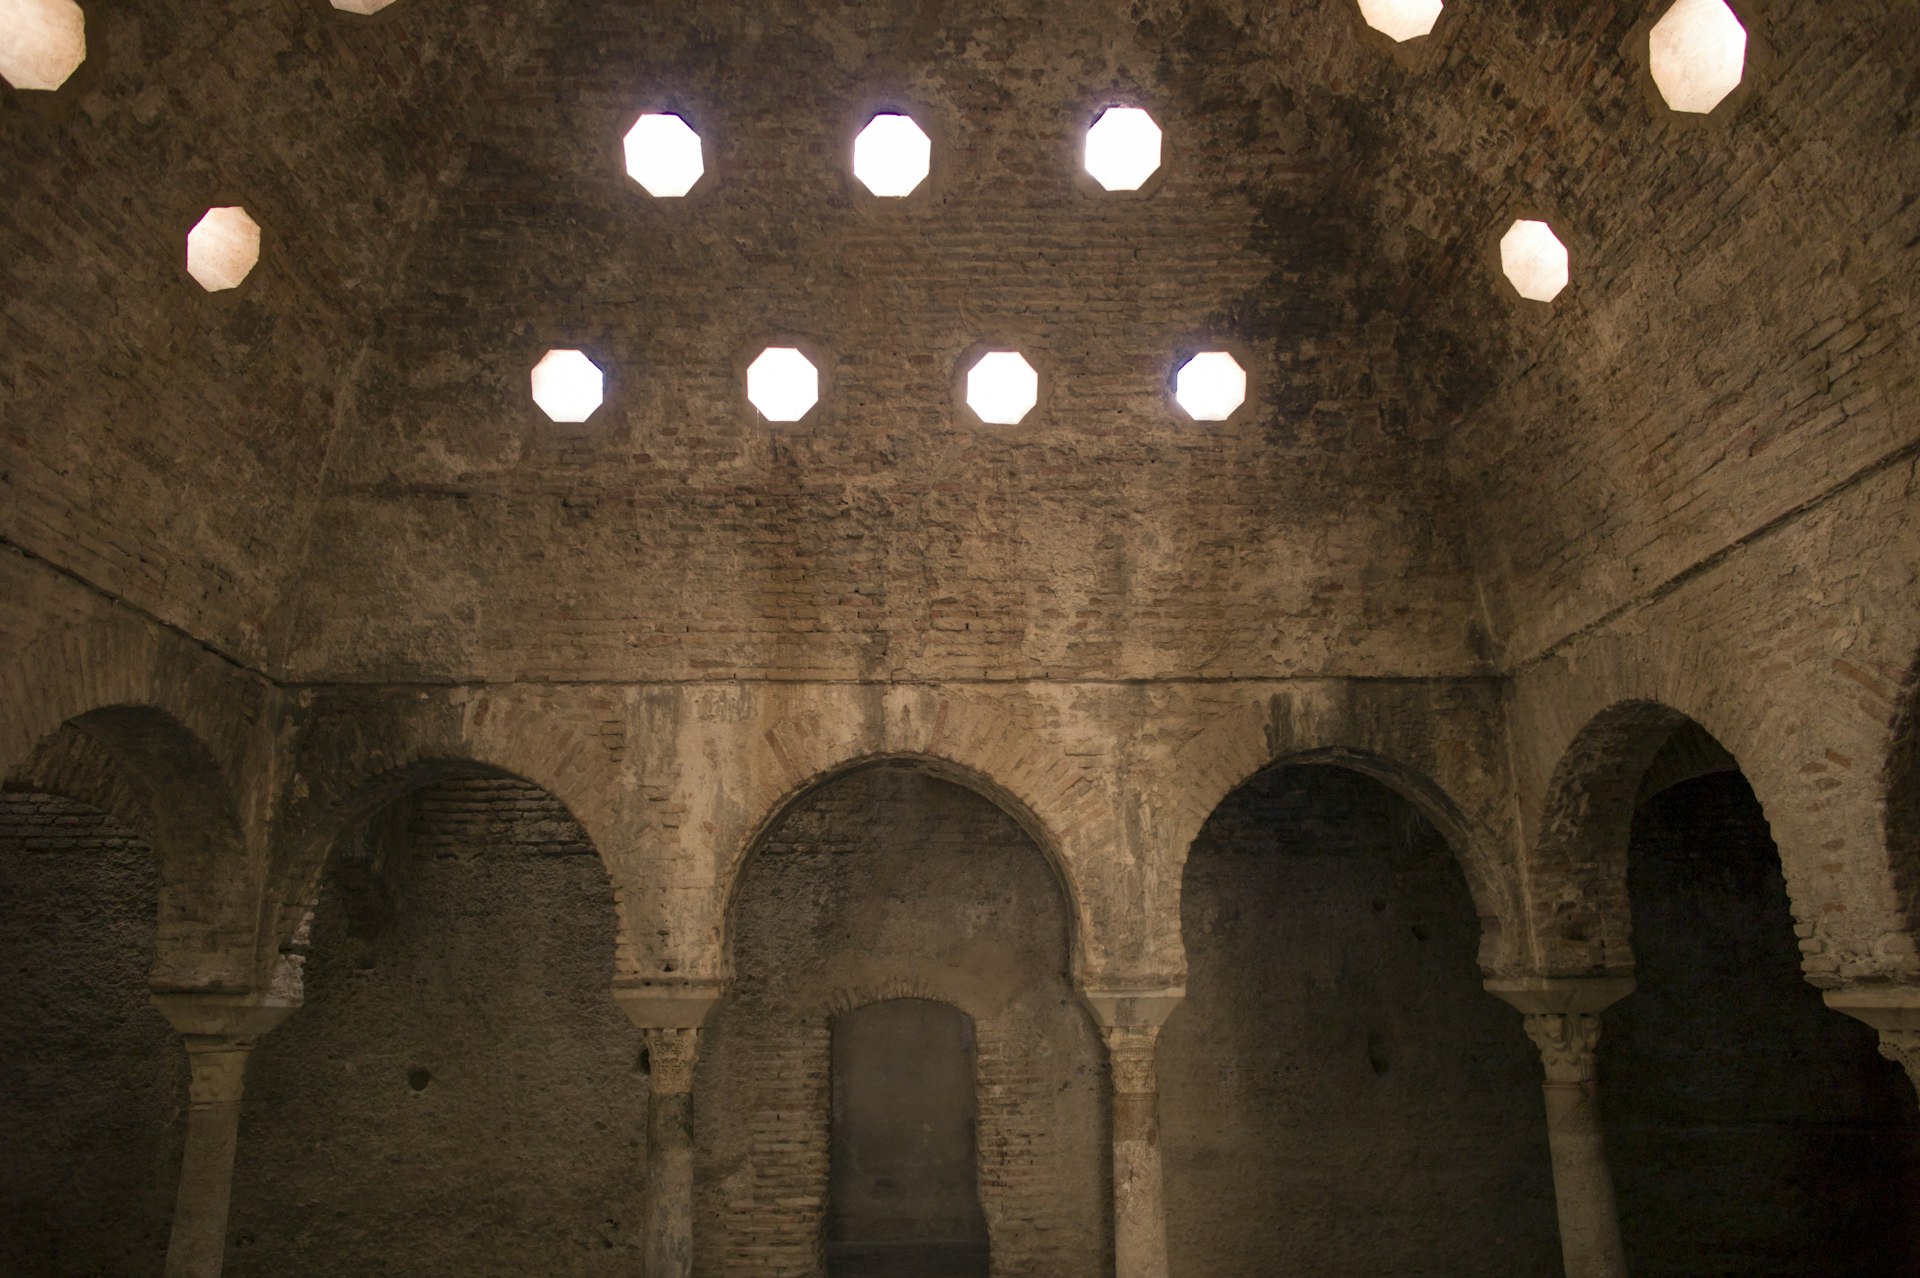 Round windows let in daylight into the historic Hammam Al Ándalus, Granada, Spain